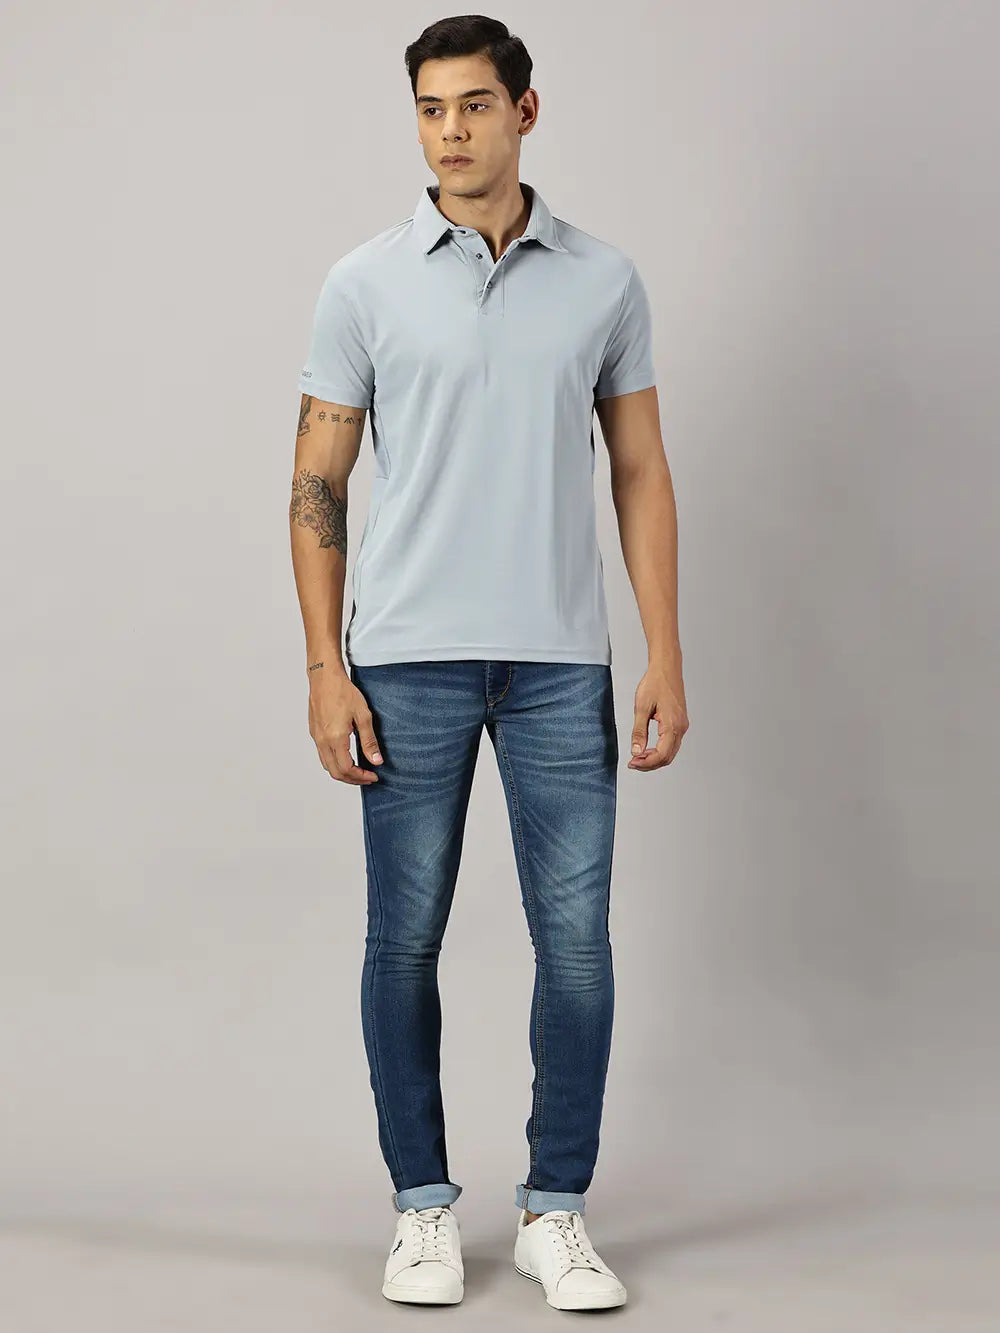 A model wearing Blue Tyga columbia blue odor-free polo t-shirt